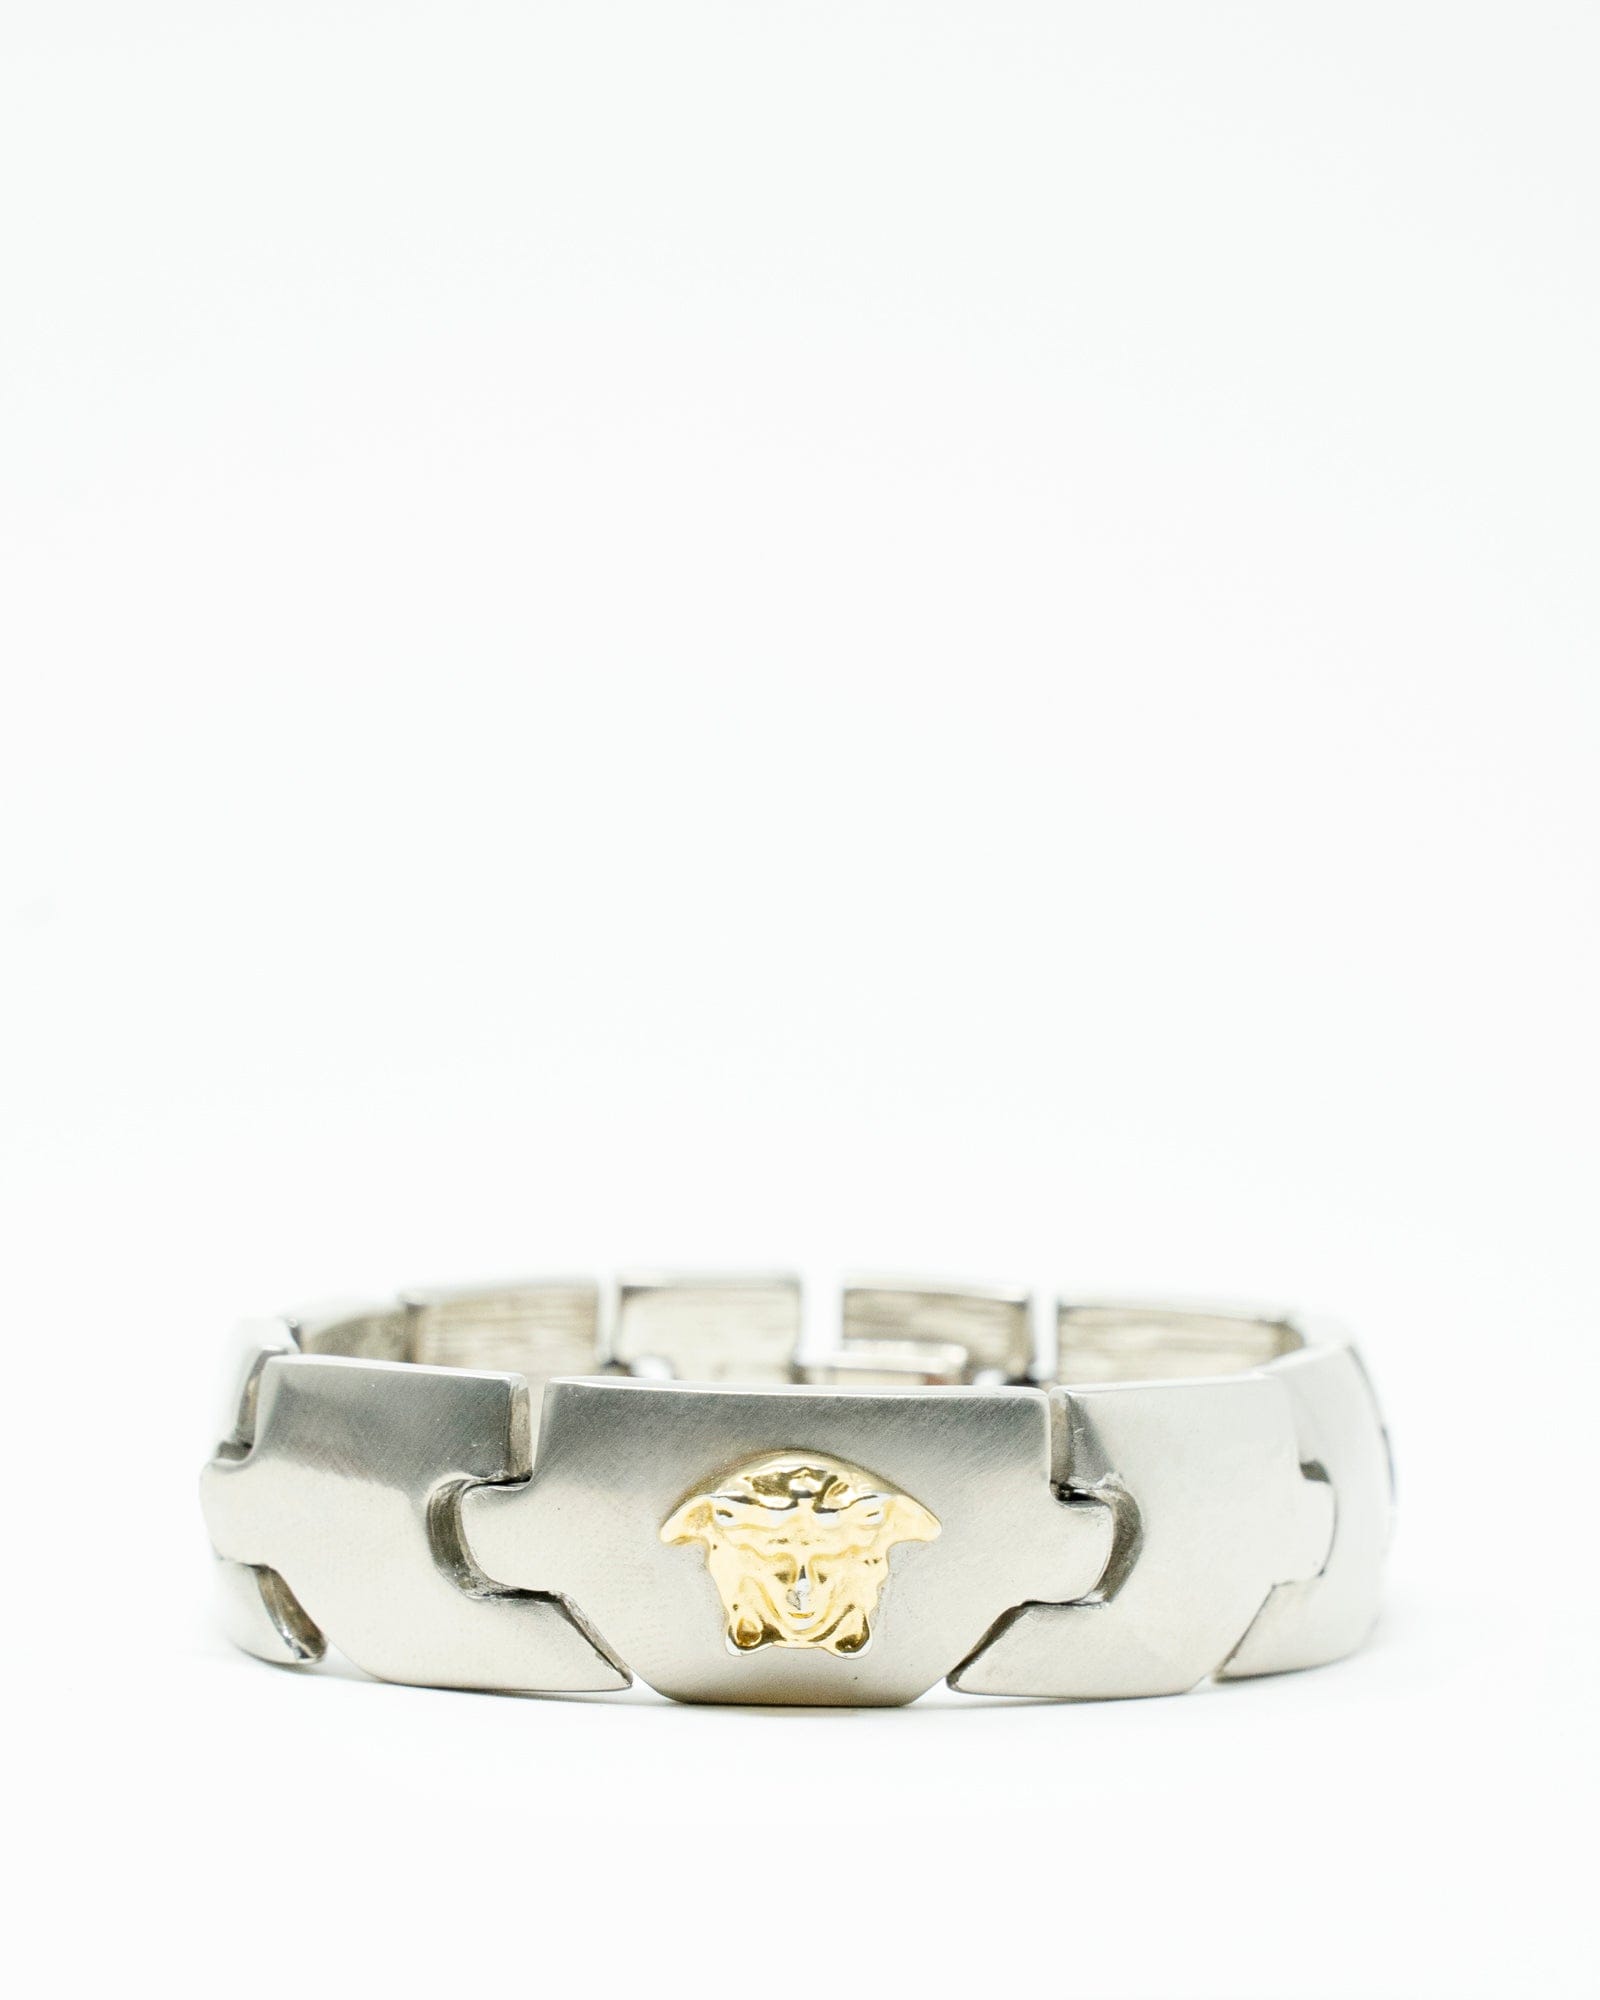 Versace Silver GIANNI VERSACE Bracelet with gold Medusa logo Vintage Y2K
 AEL1006